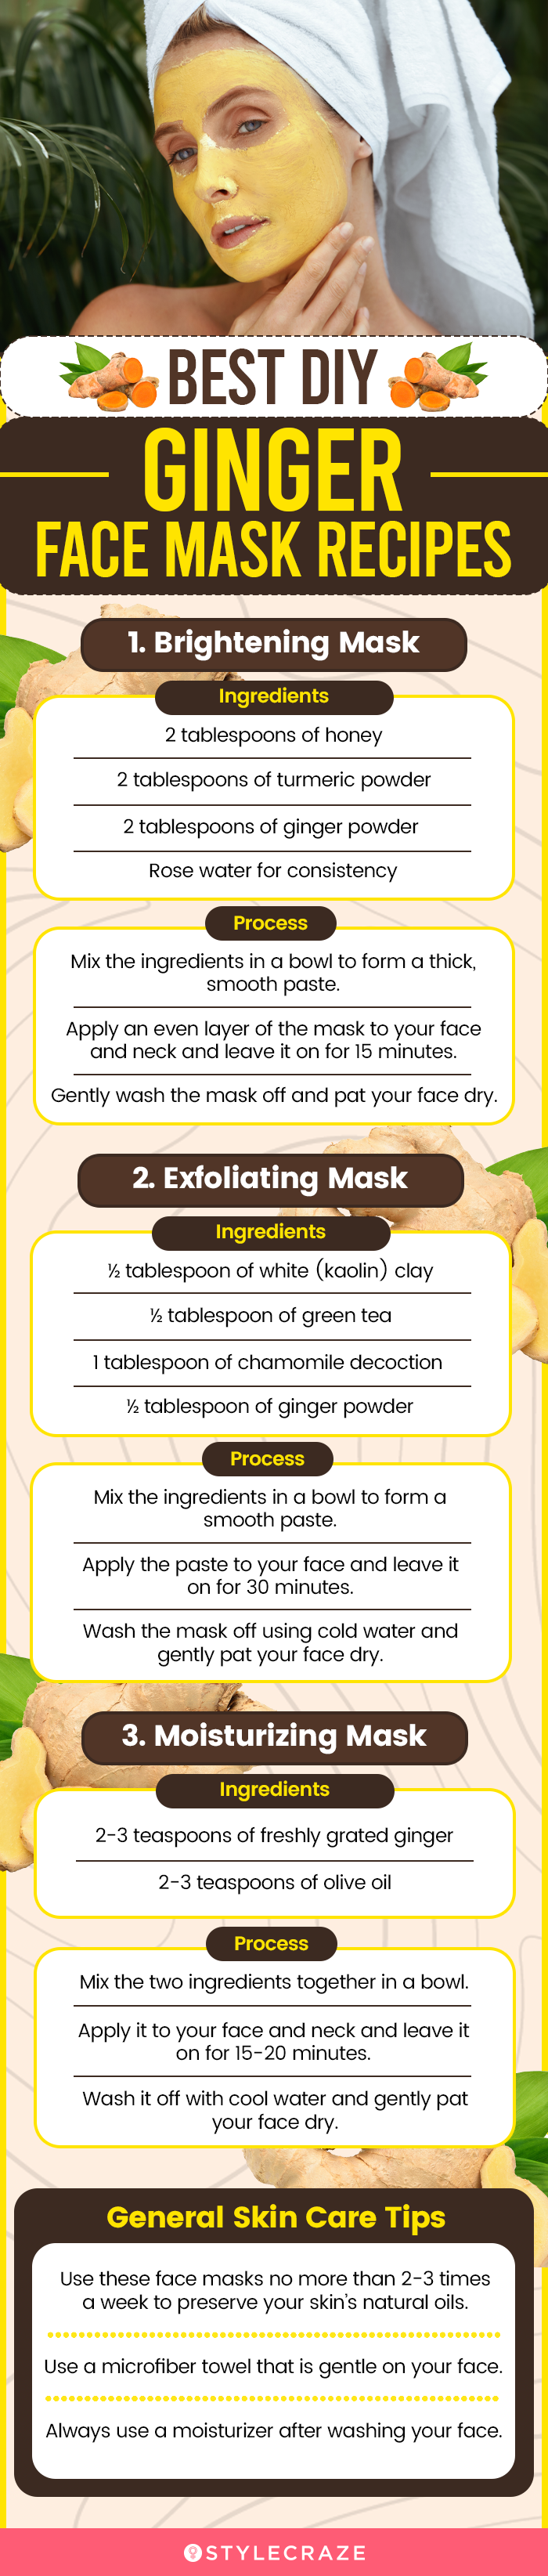 best diy ginger face mask recipes (infographic)